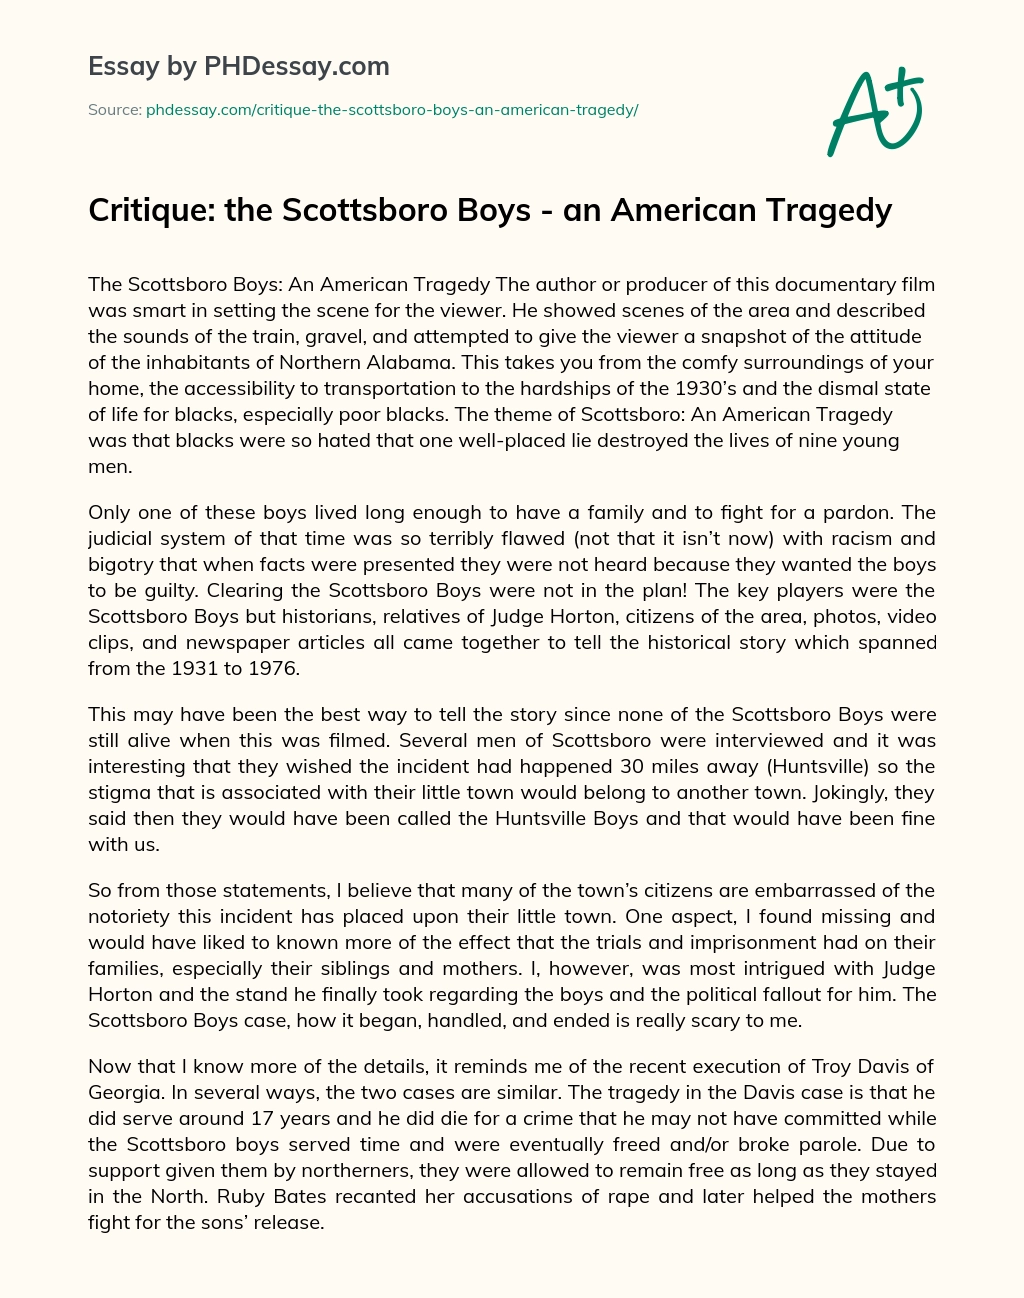 Critique: the Scottsboro Boys – an American Tragedy essay